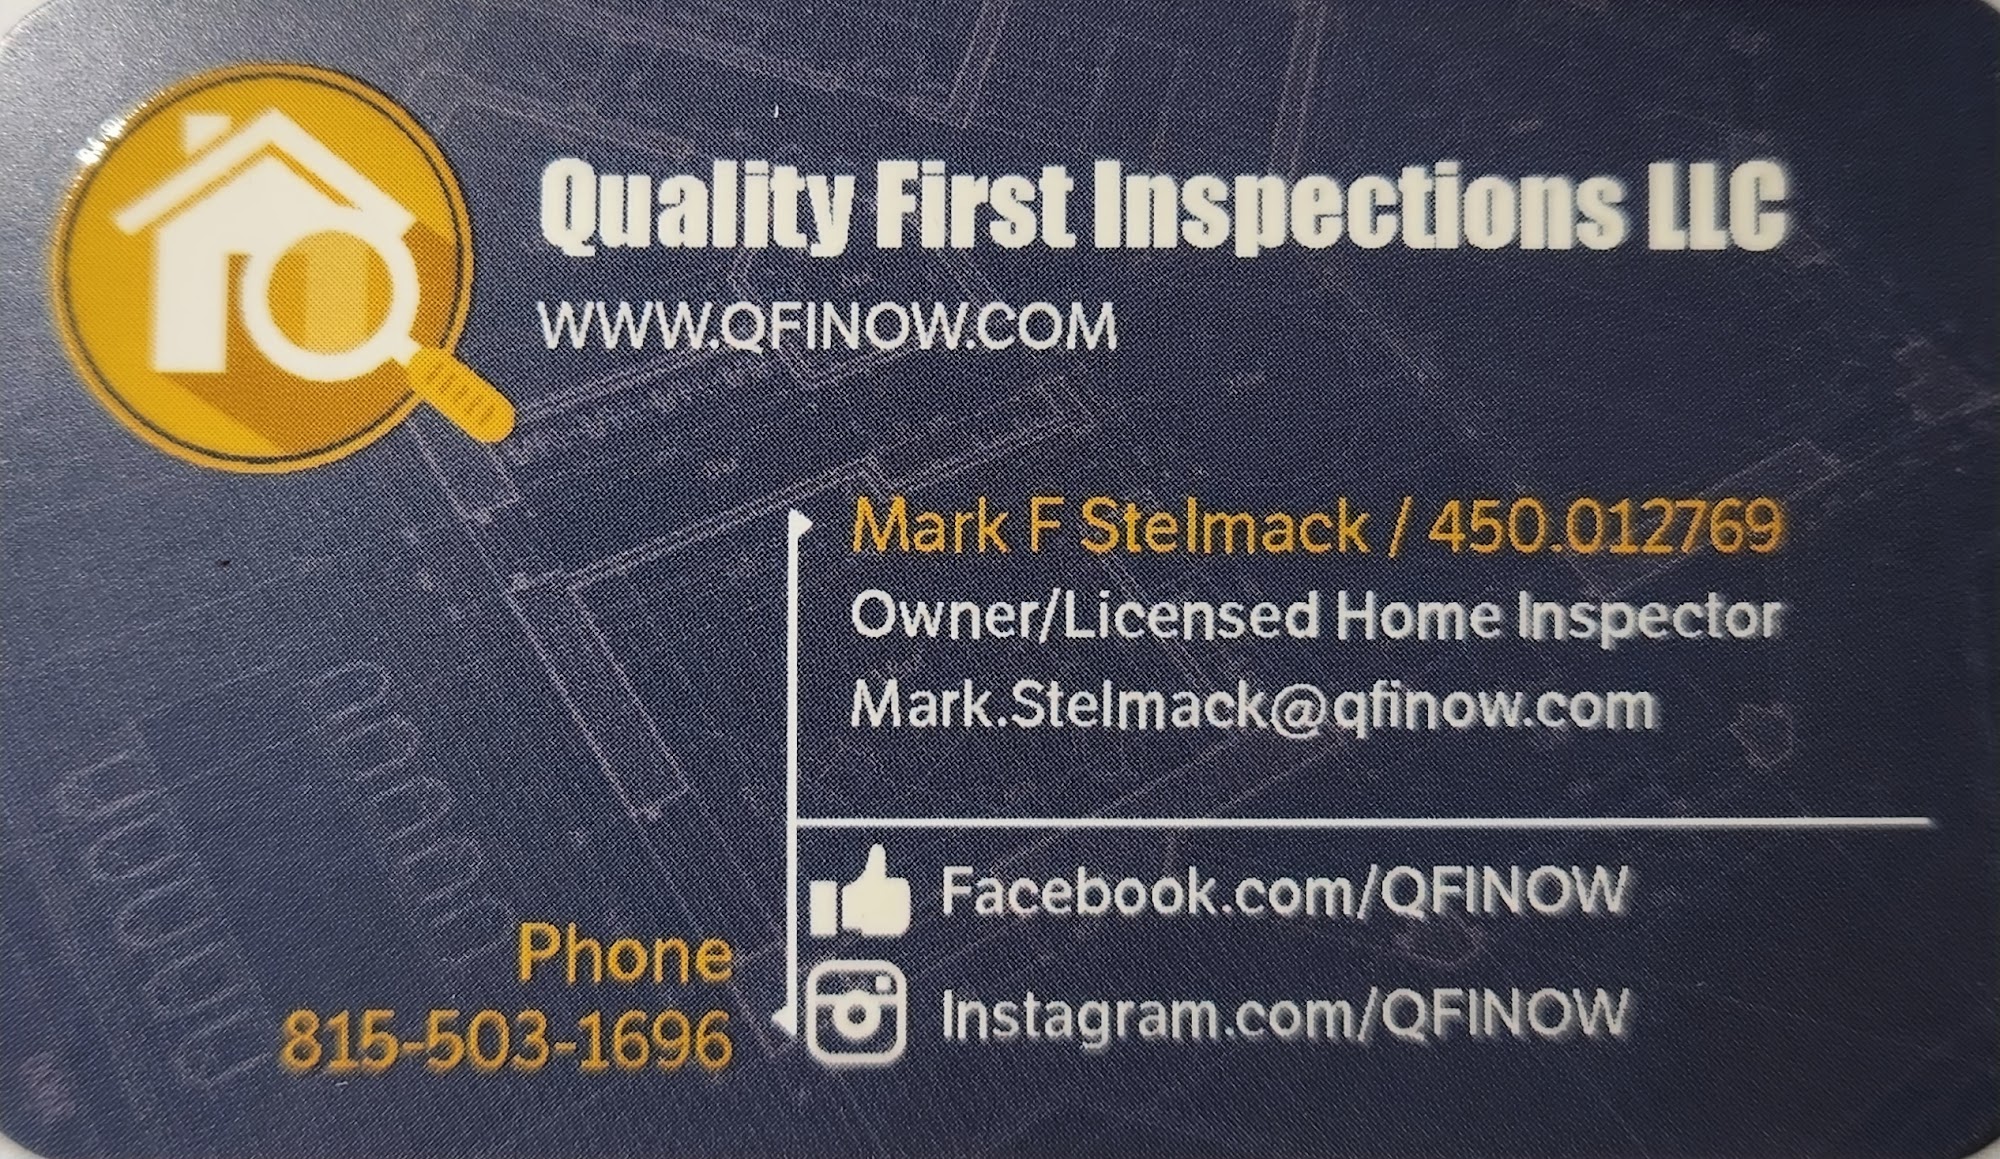 Quality First Inspections, LLC 907 Illinois Ave, Mendota Illinois 61342